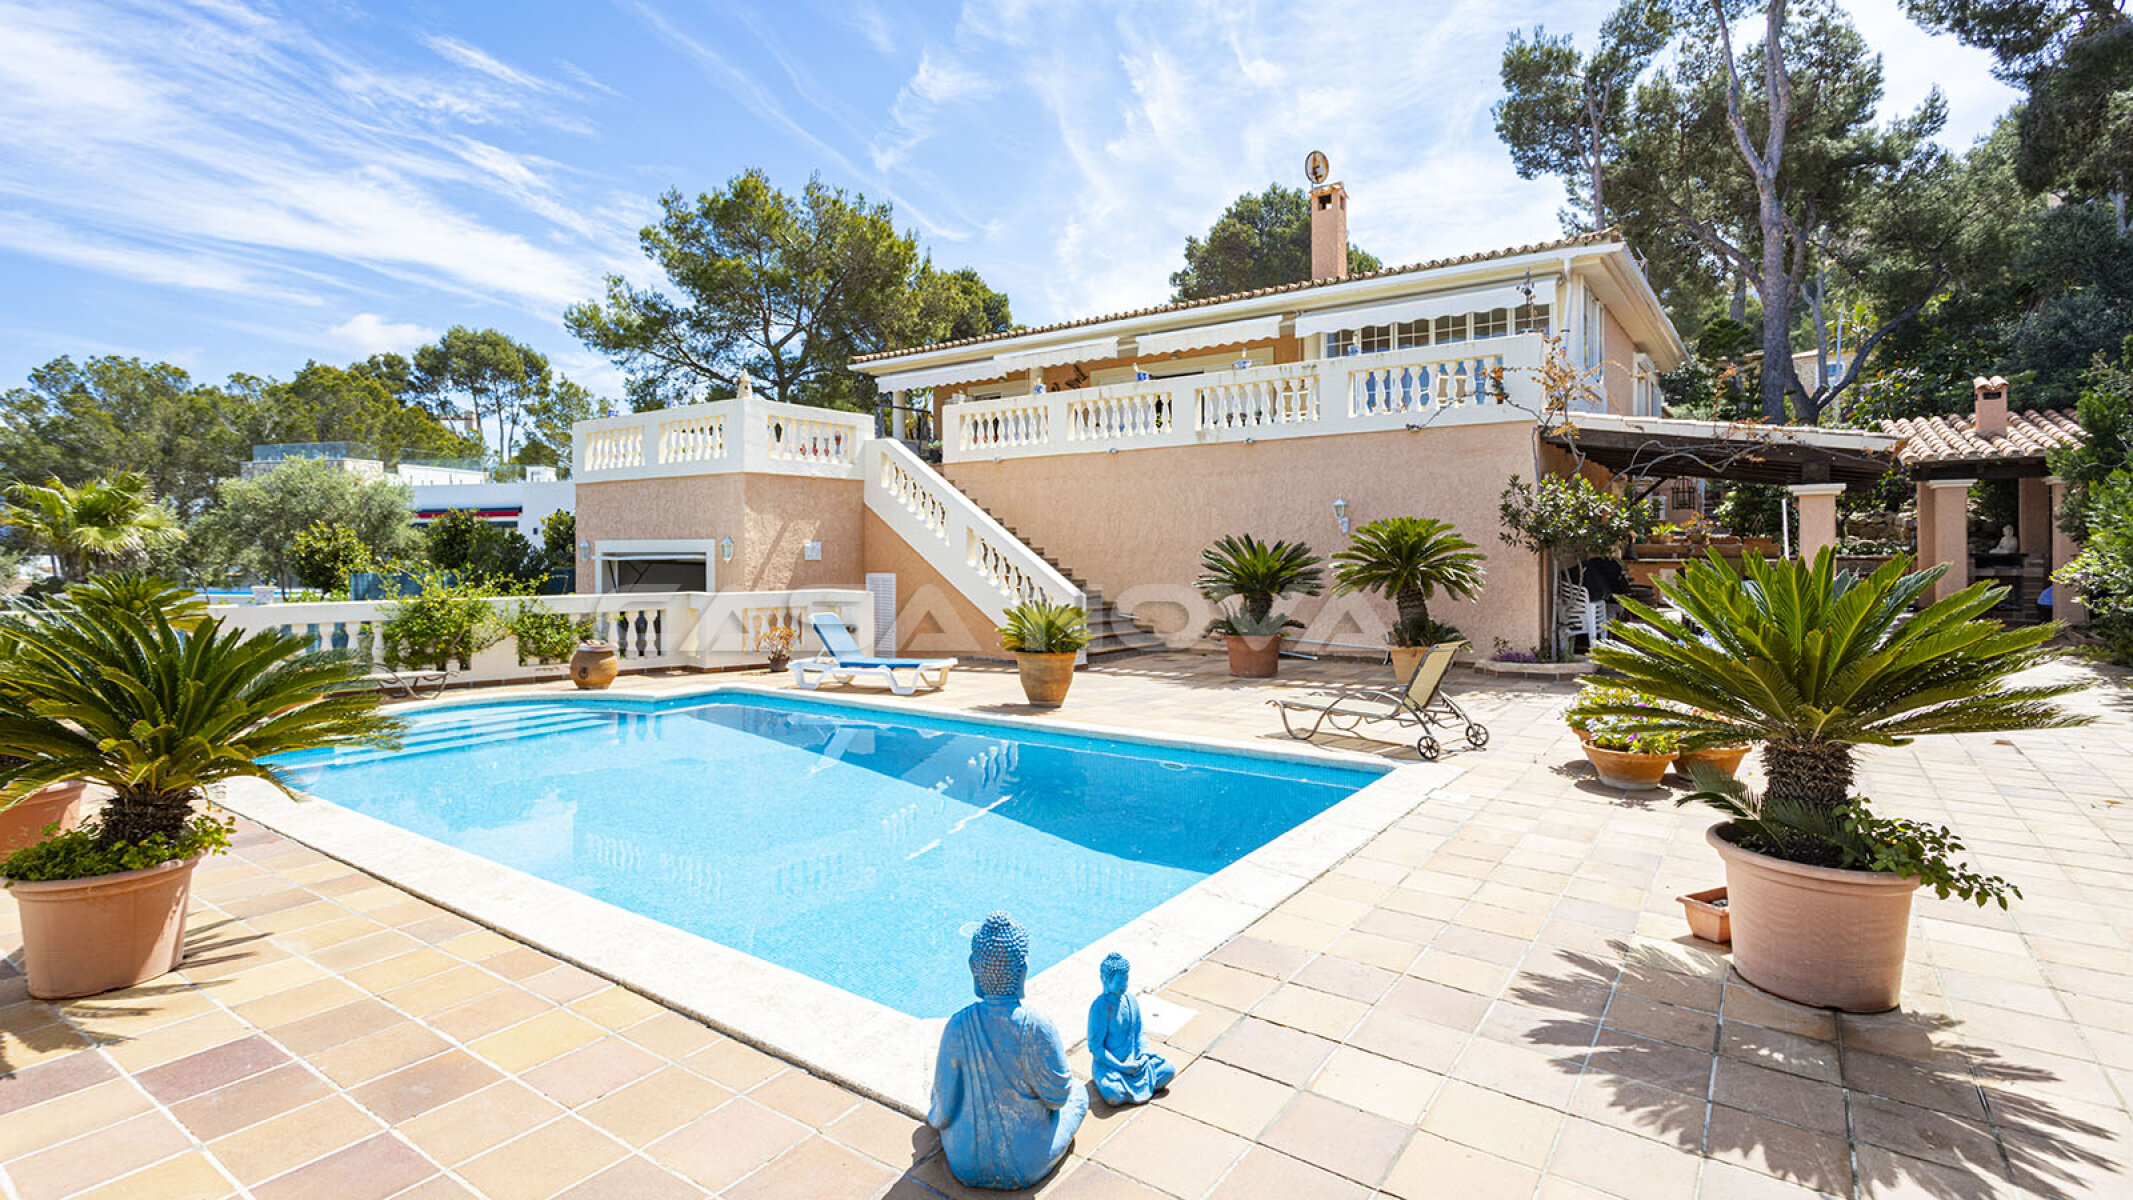 Villa mediterranea en zona residencial tranquila